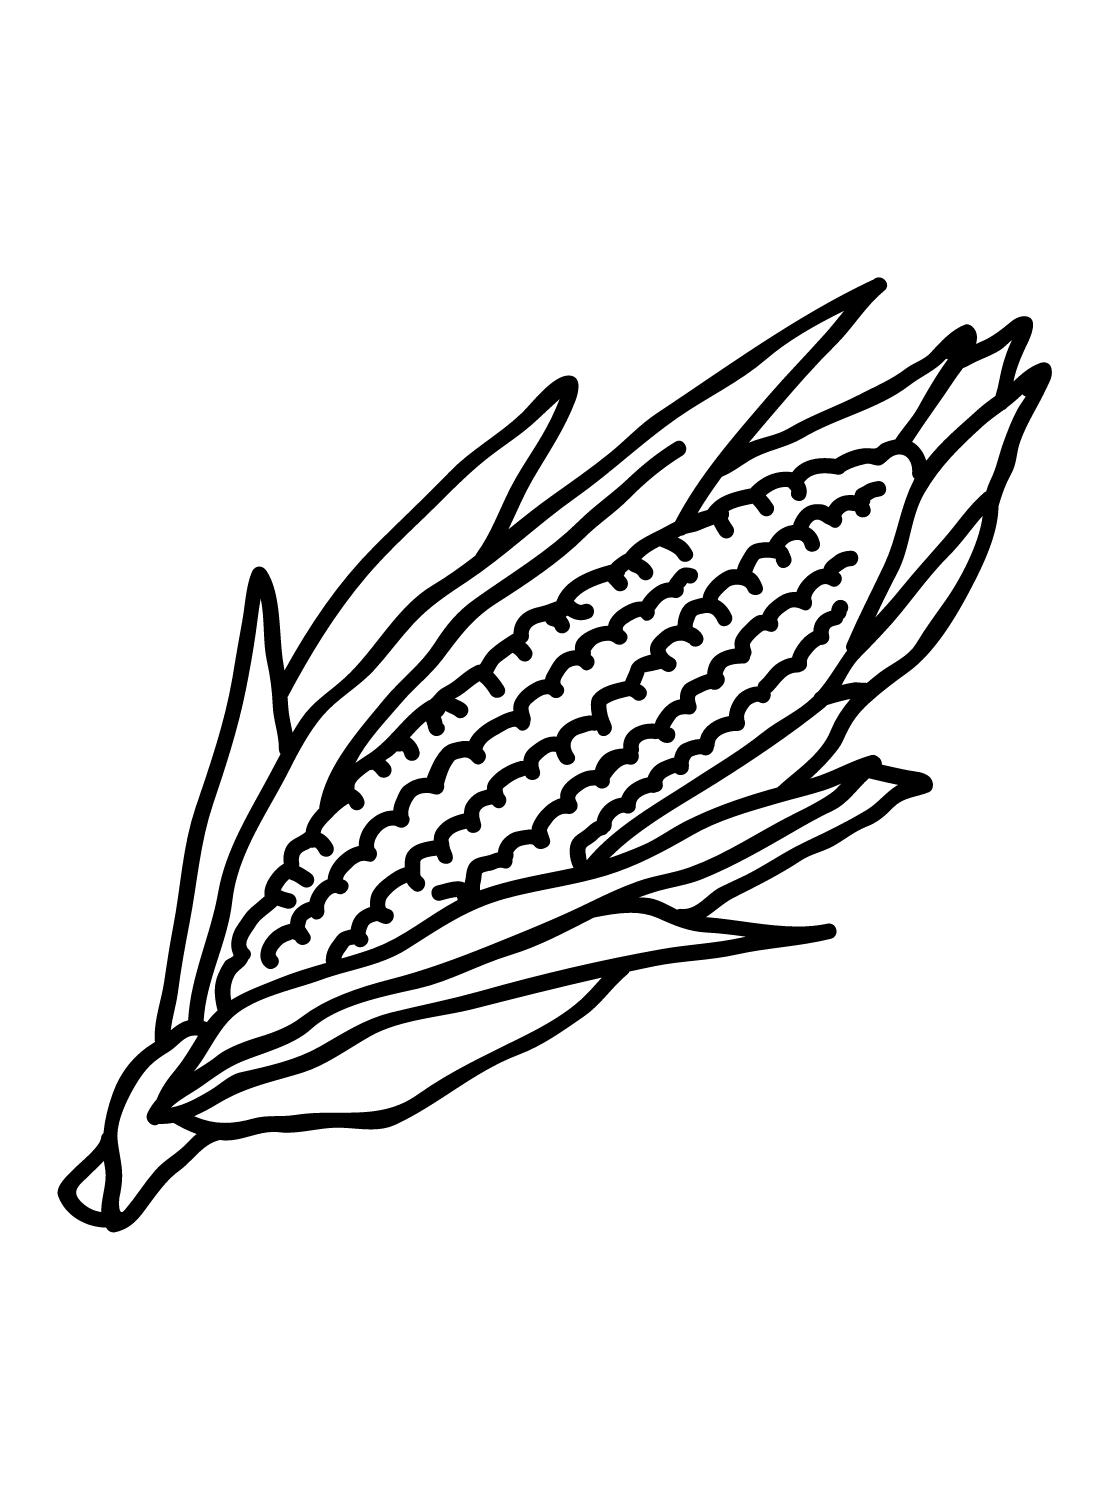 Corn Free Printable from Corn